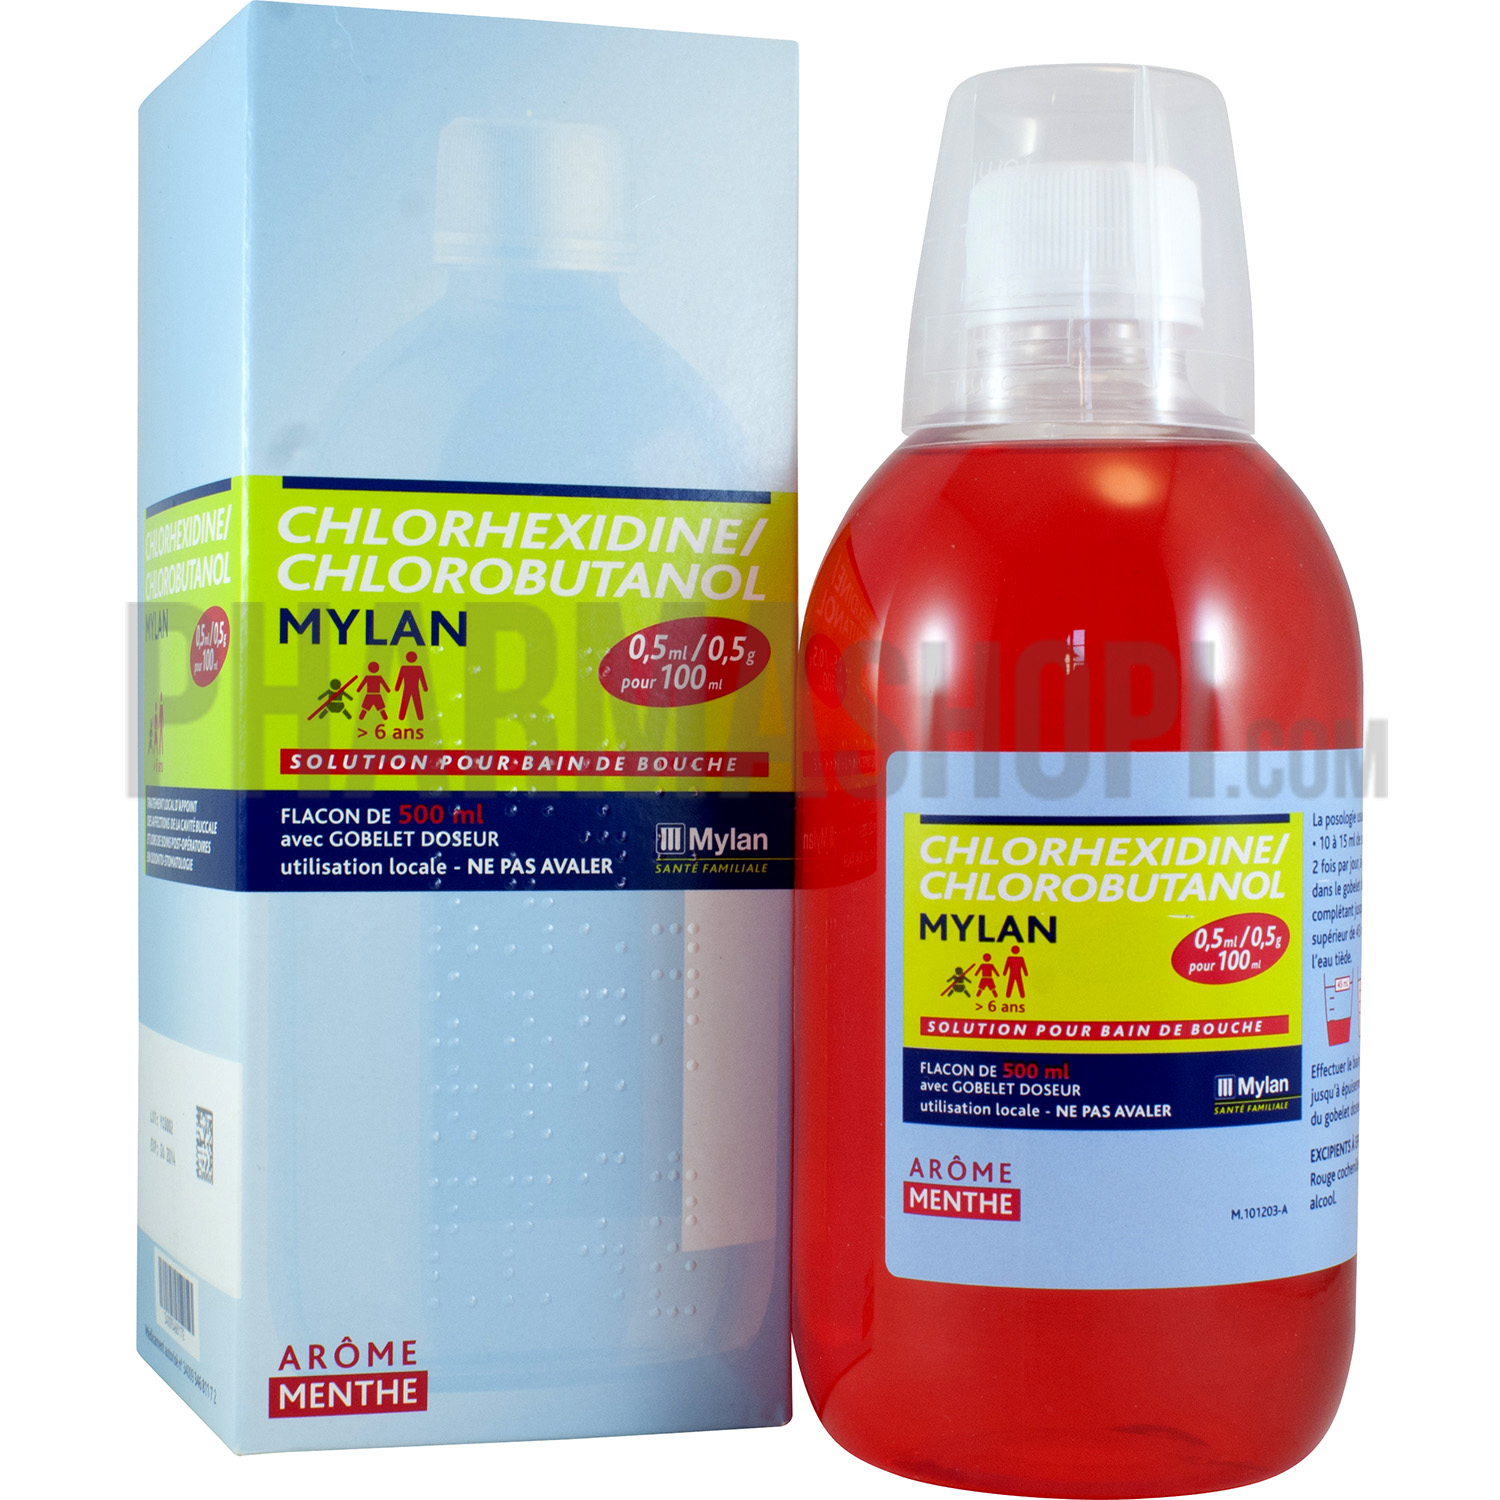 Chlorhexidine Chlorobutanol Mylan 0,5ml/0,5g solution pour bain de bouche - flacon de 500ml